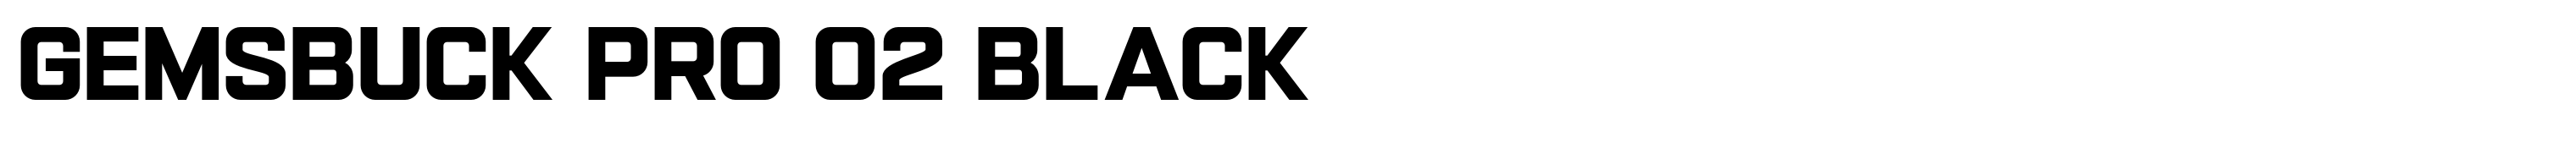 Gemsbuck Pro 02 Black